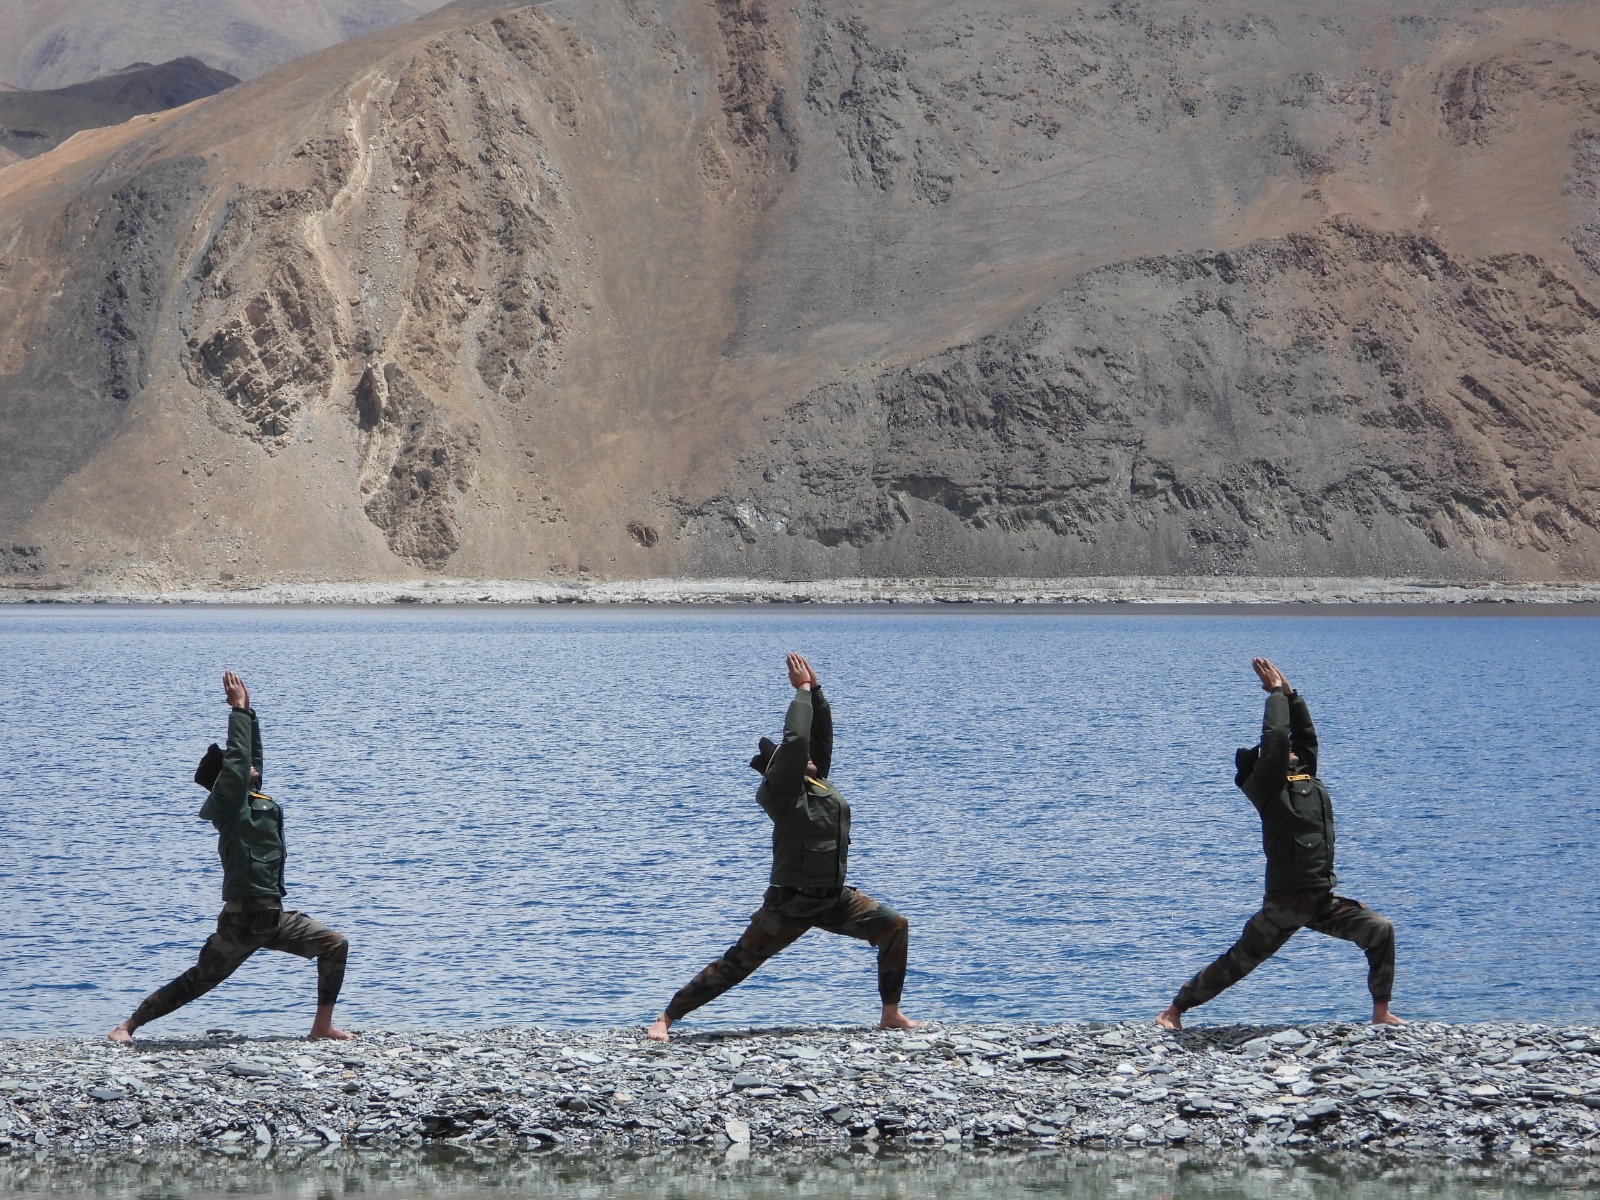 Indian Army personnel perform Yoga at Ladakh's Pangong Tso Lake